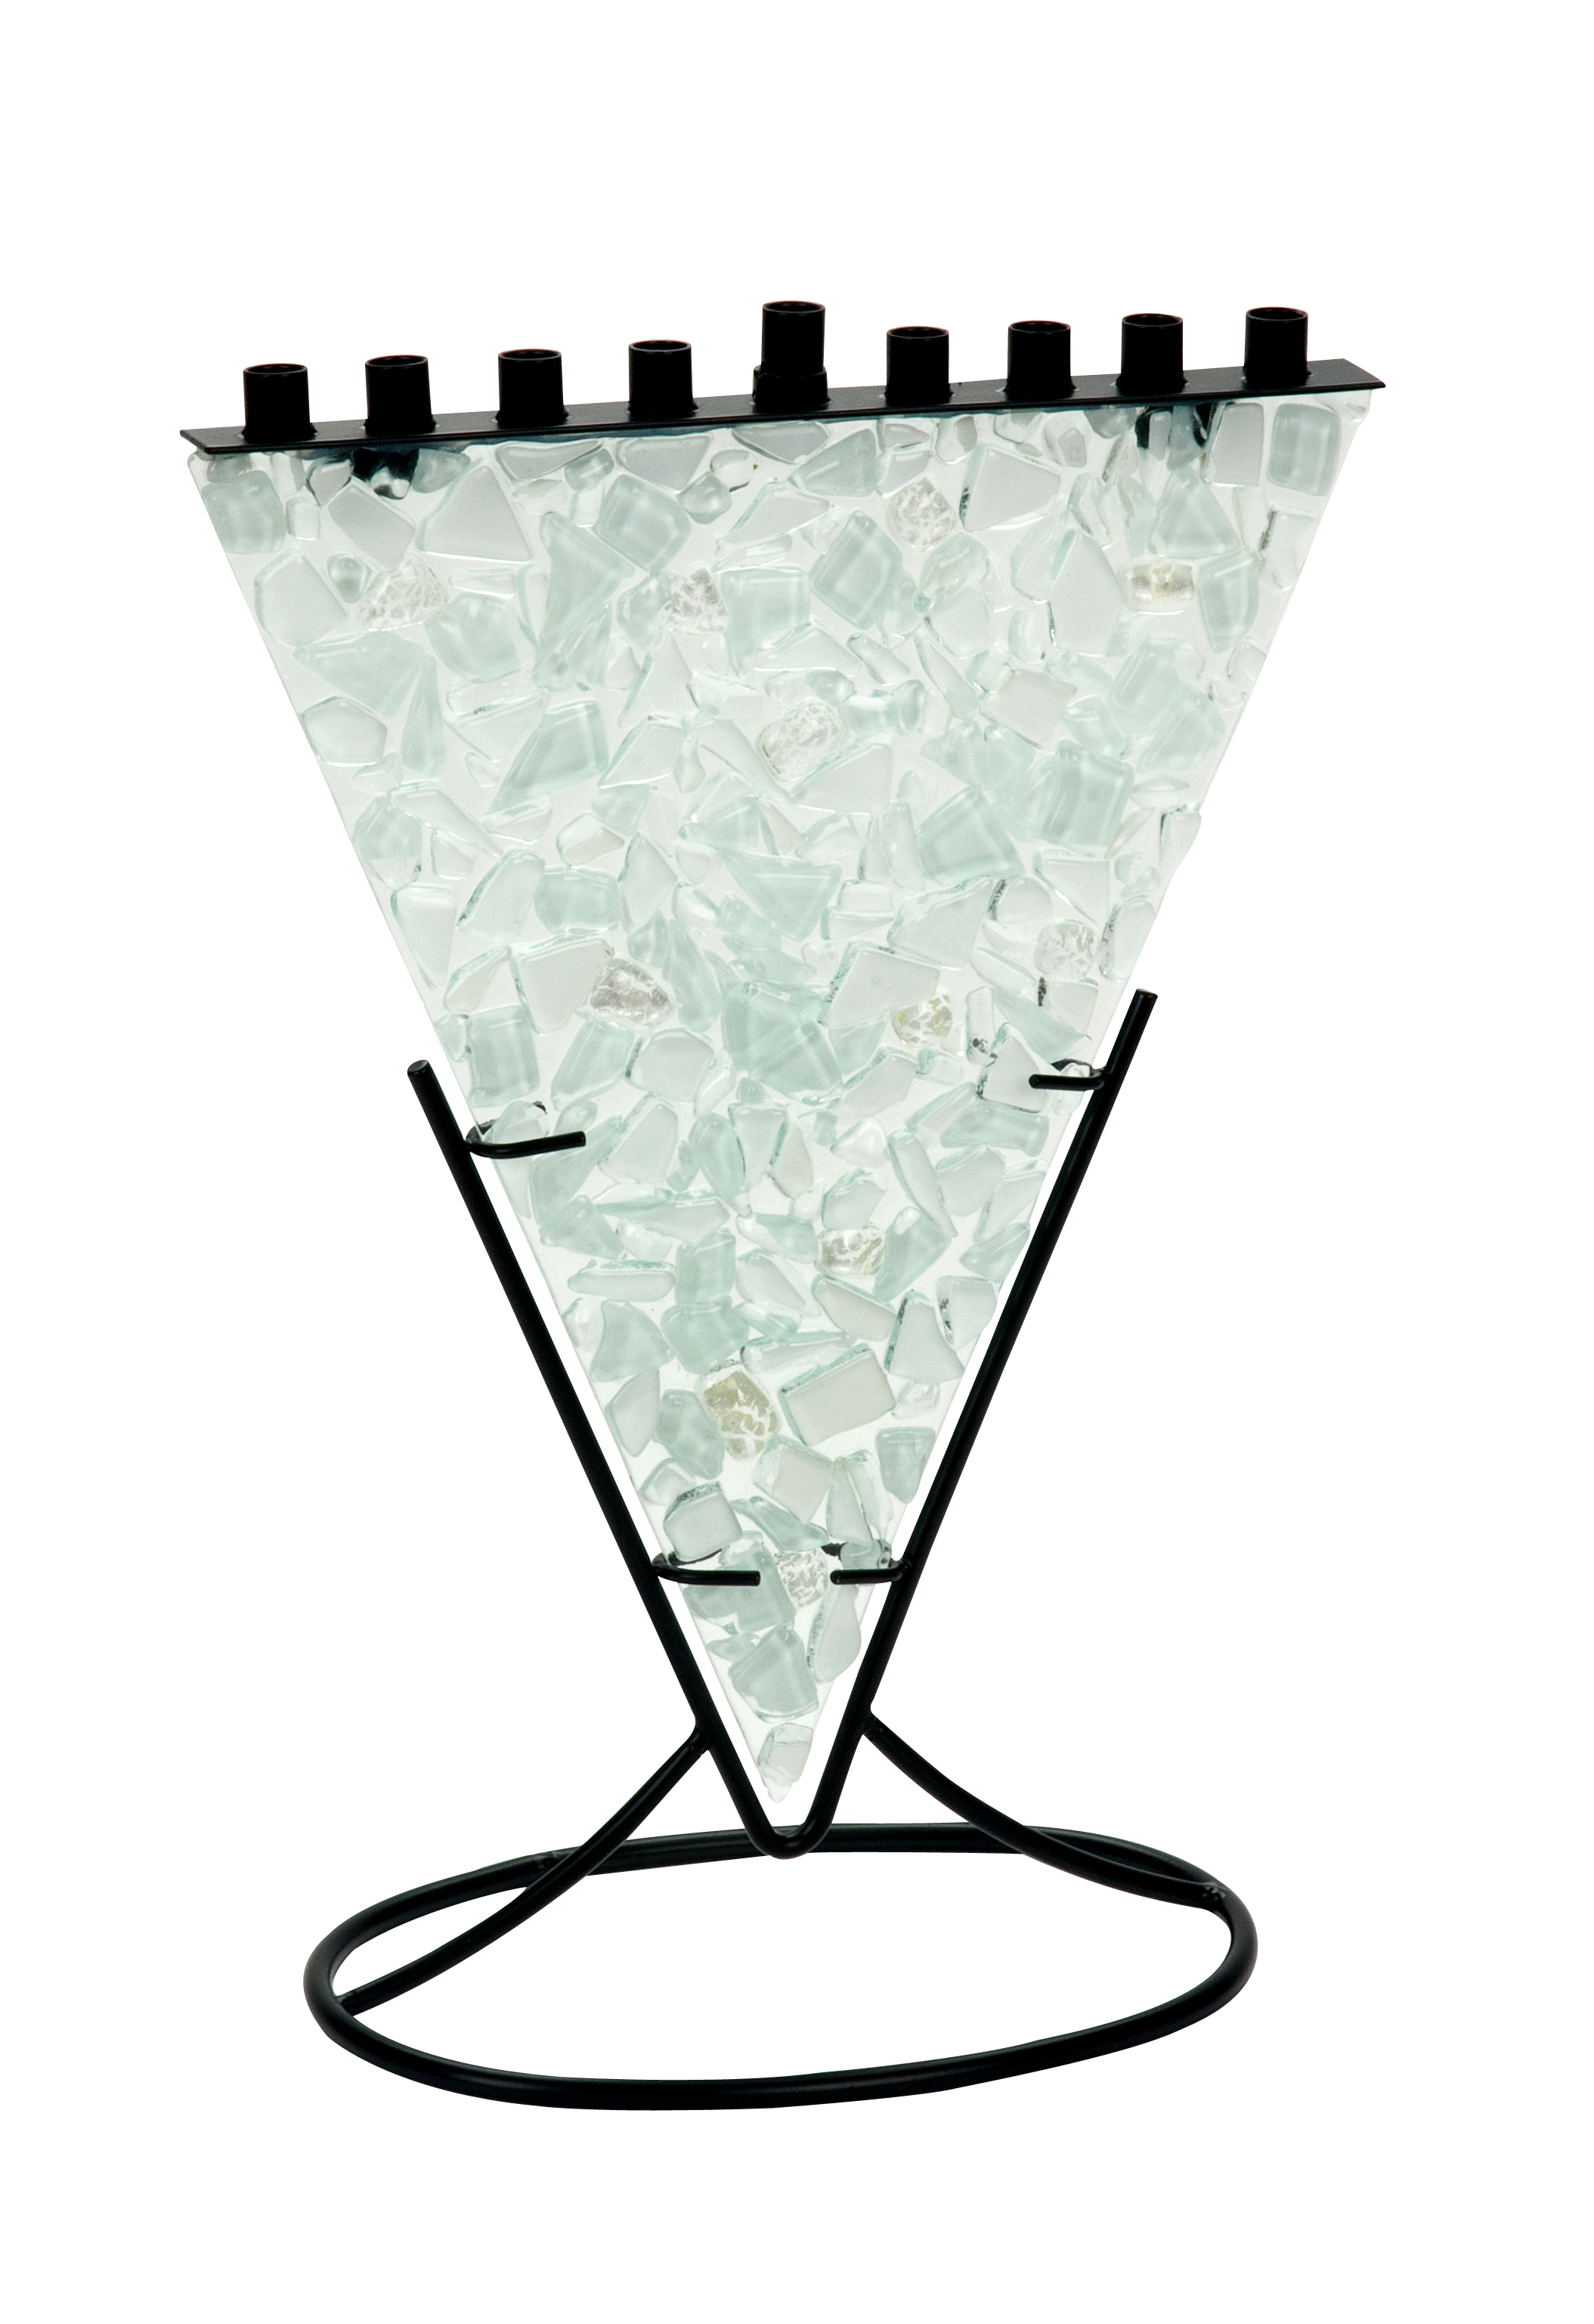 Giftmark Inc Multi Colored White, Clear and soft Aqua Tones of Fused Glass Triangle Shaped Menorah - M-749